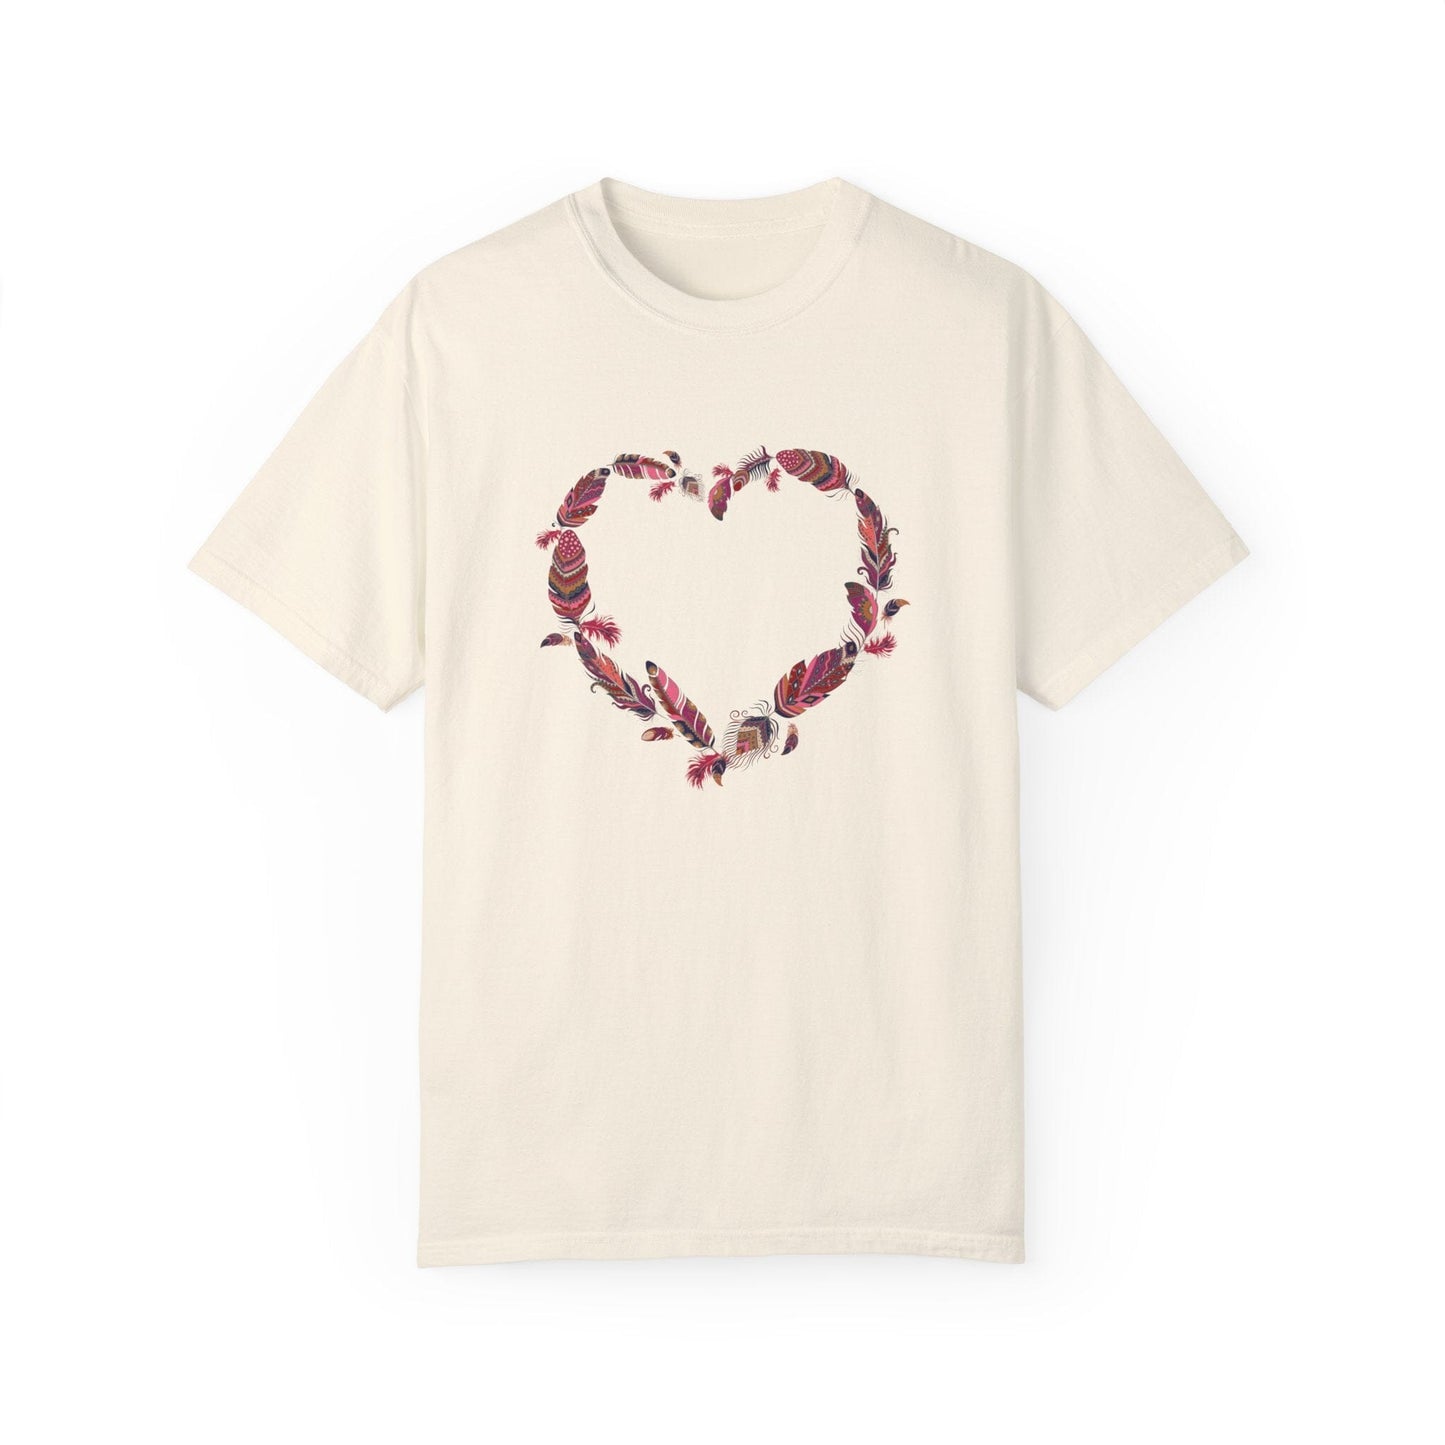 Flowers Tshirt, Boho Feathers Tshirt, Boho Valentine's Day Heart Shirt, Floral Nature Shirt, Art Nouveau Art Deco Shirt, Flowers Lover Graphic Tee T-Shirt Printify Ivory S 